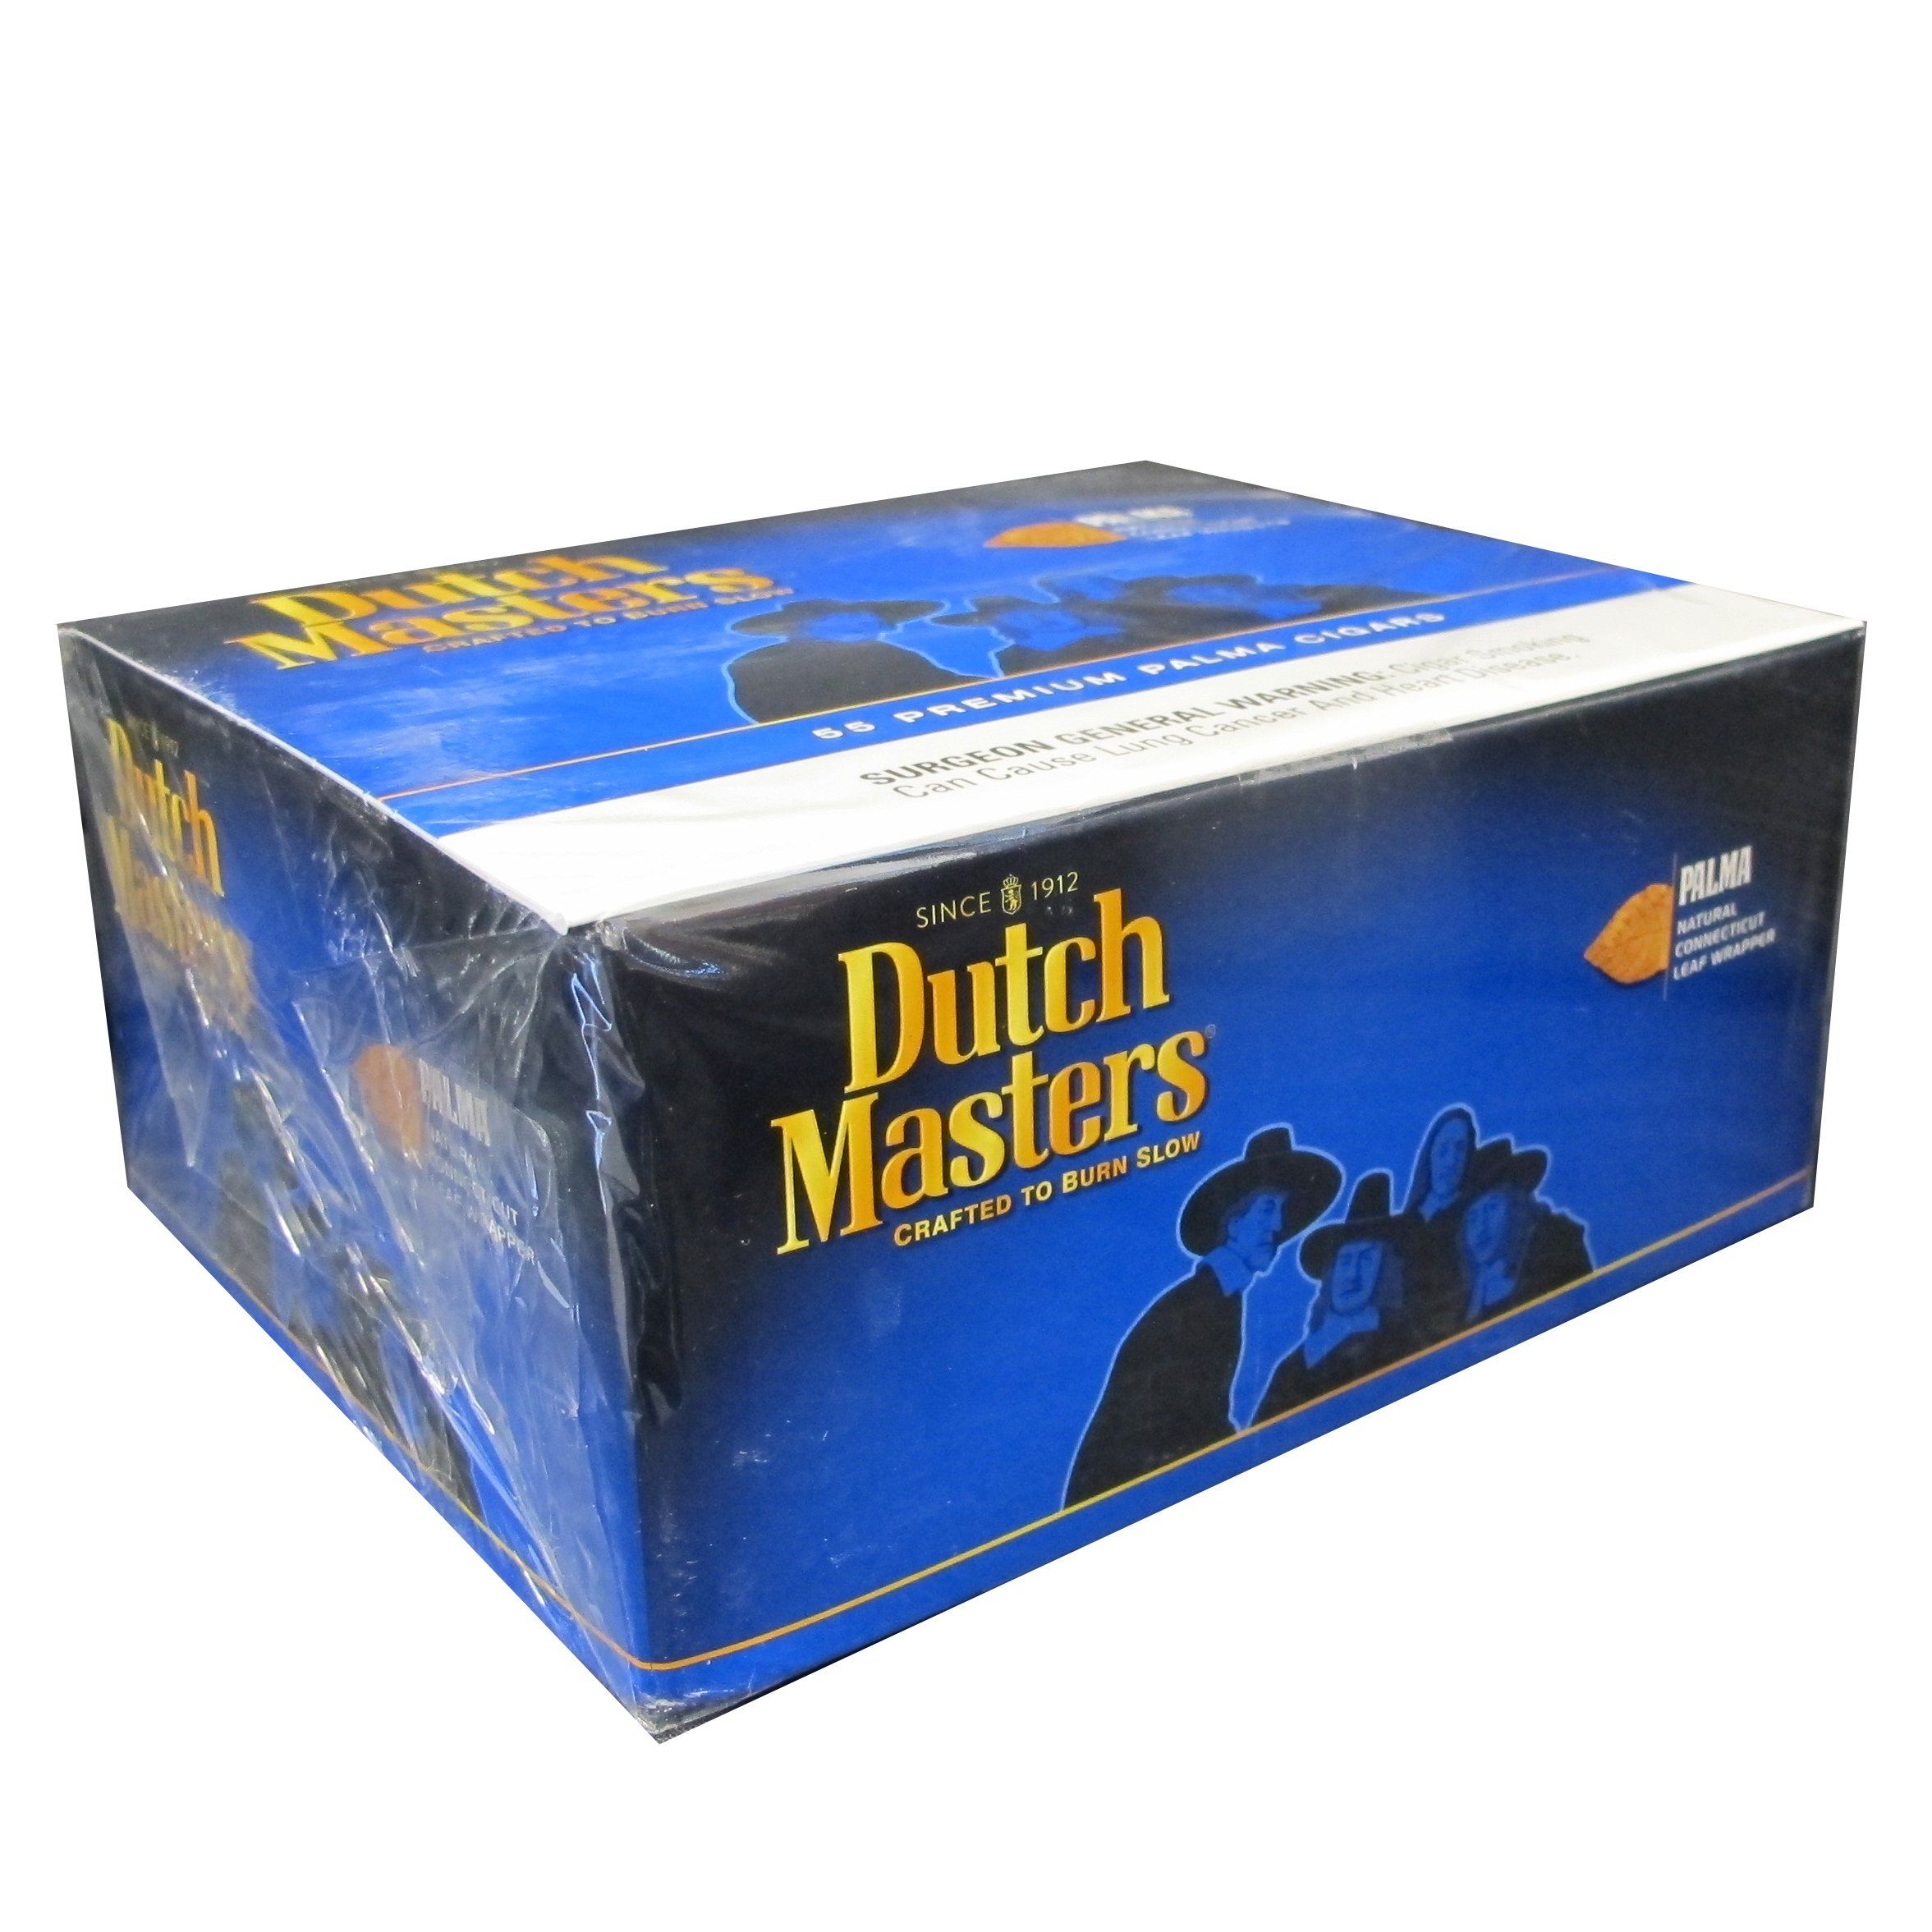 Dutch Masters Palma Cigars Machine Made Bnb Tobacco